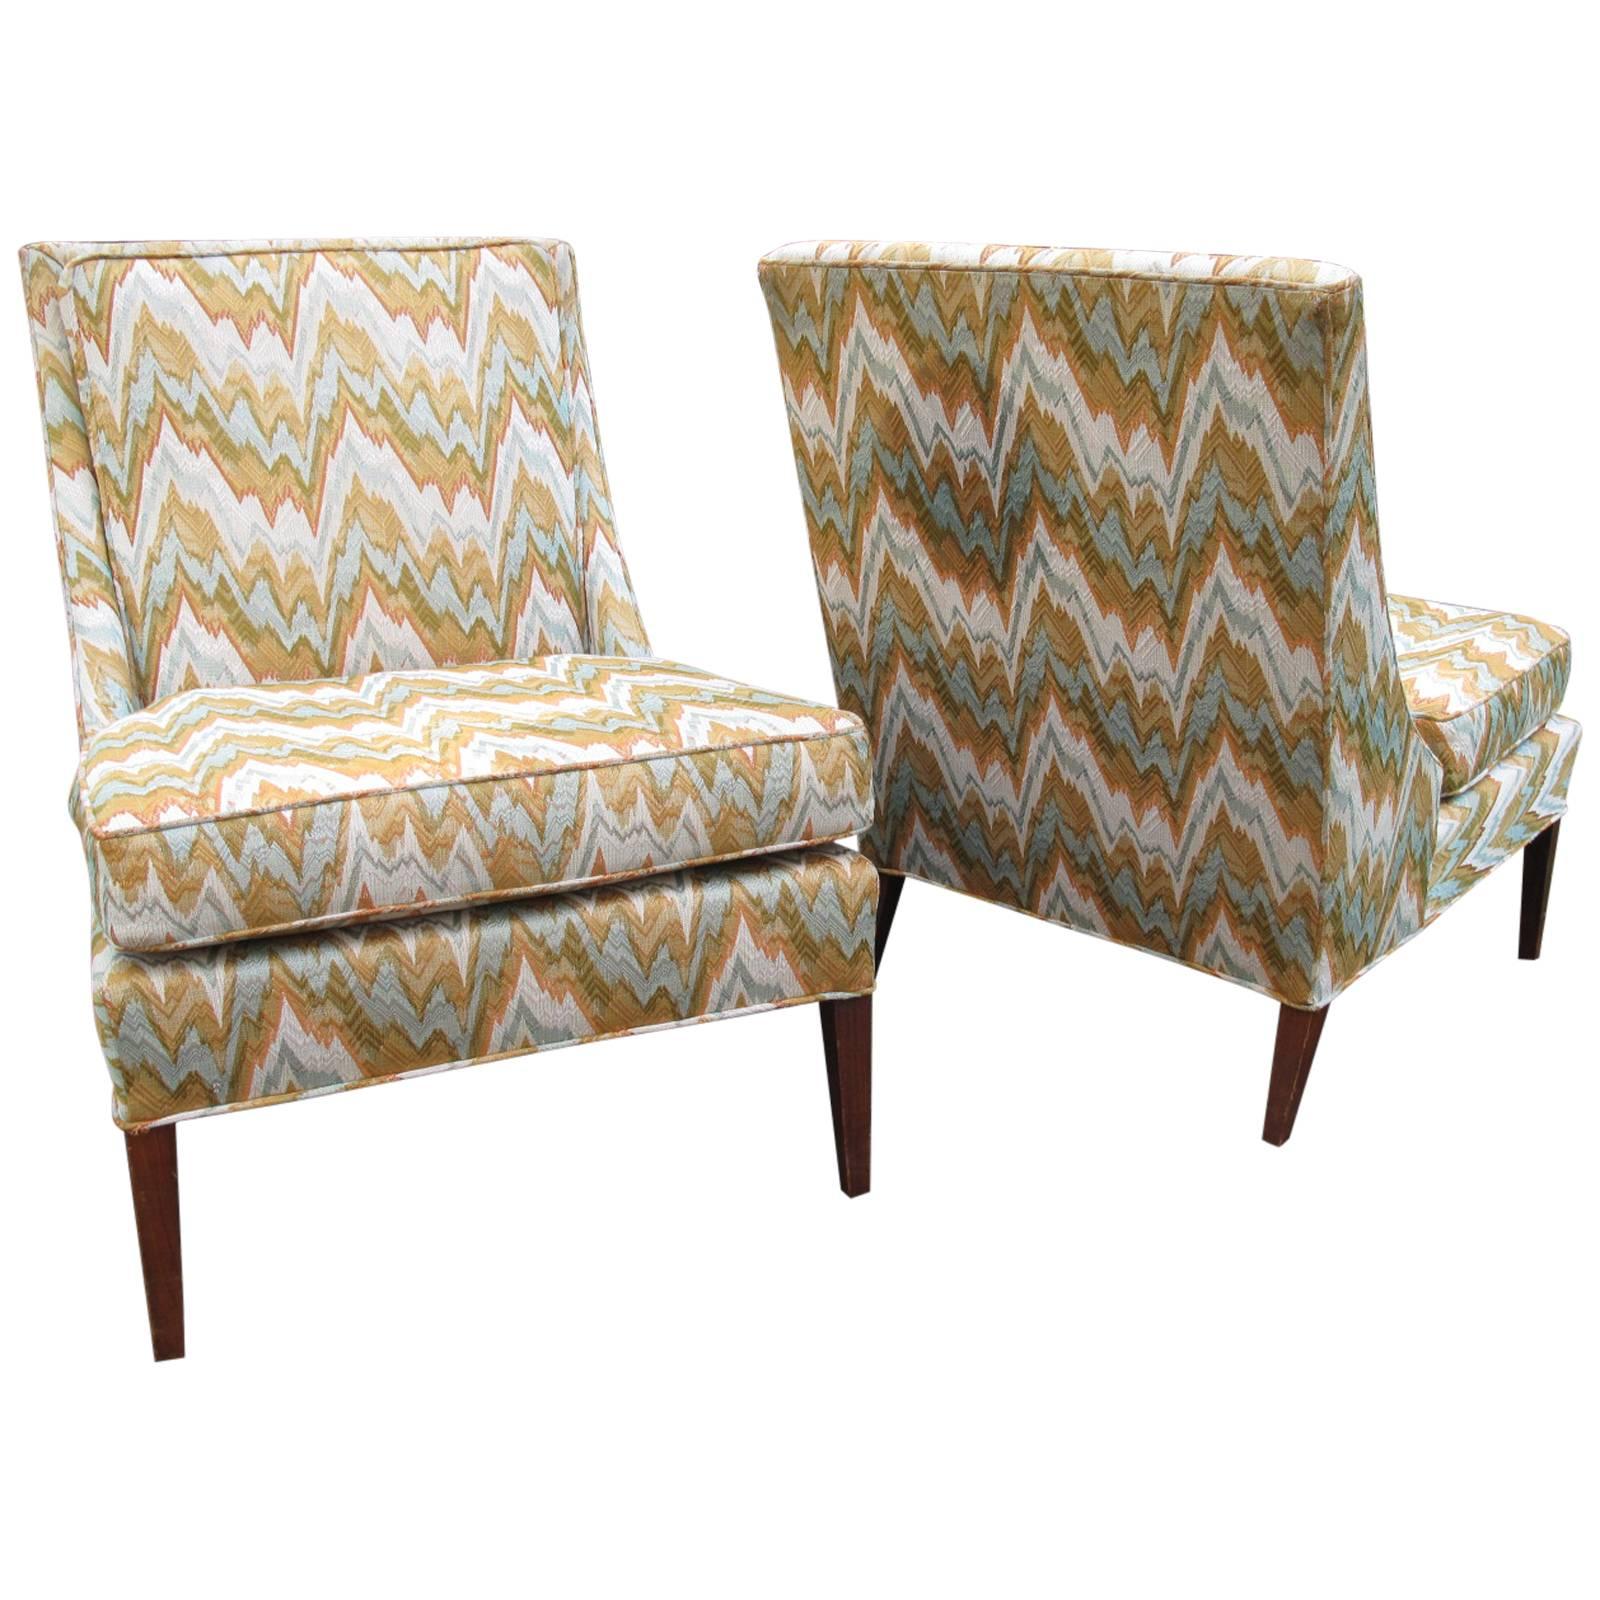 Pair of Mid-Century Slipper Chairs, Style of Paul McCobb